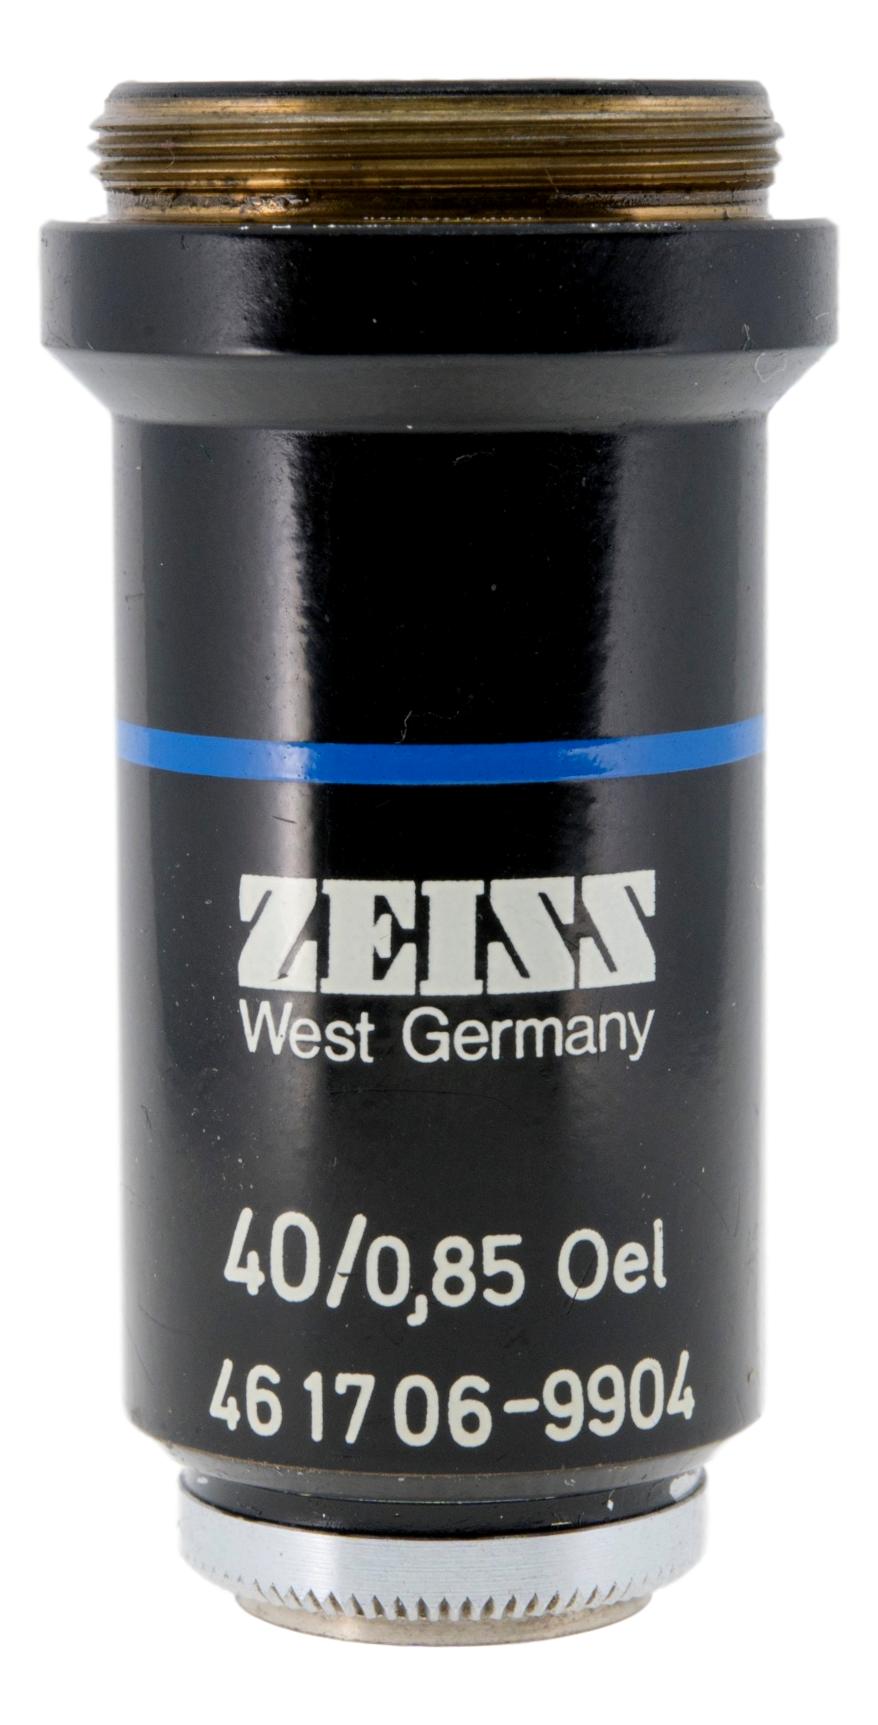 Zeiss 40x Oil 461706-9904 Objective